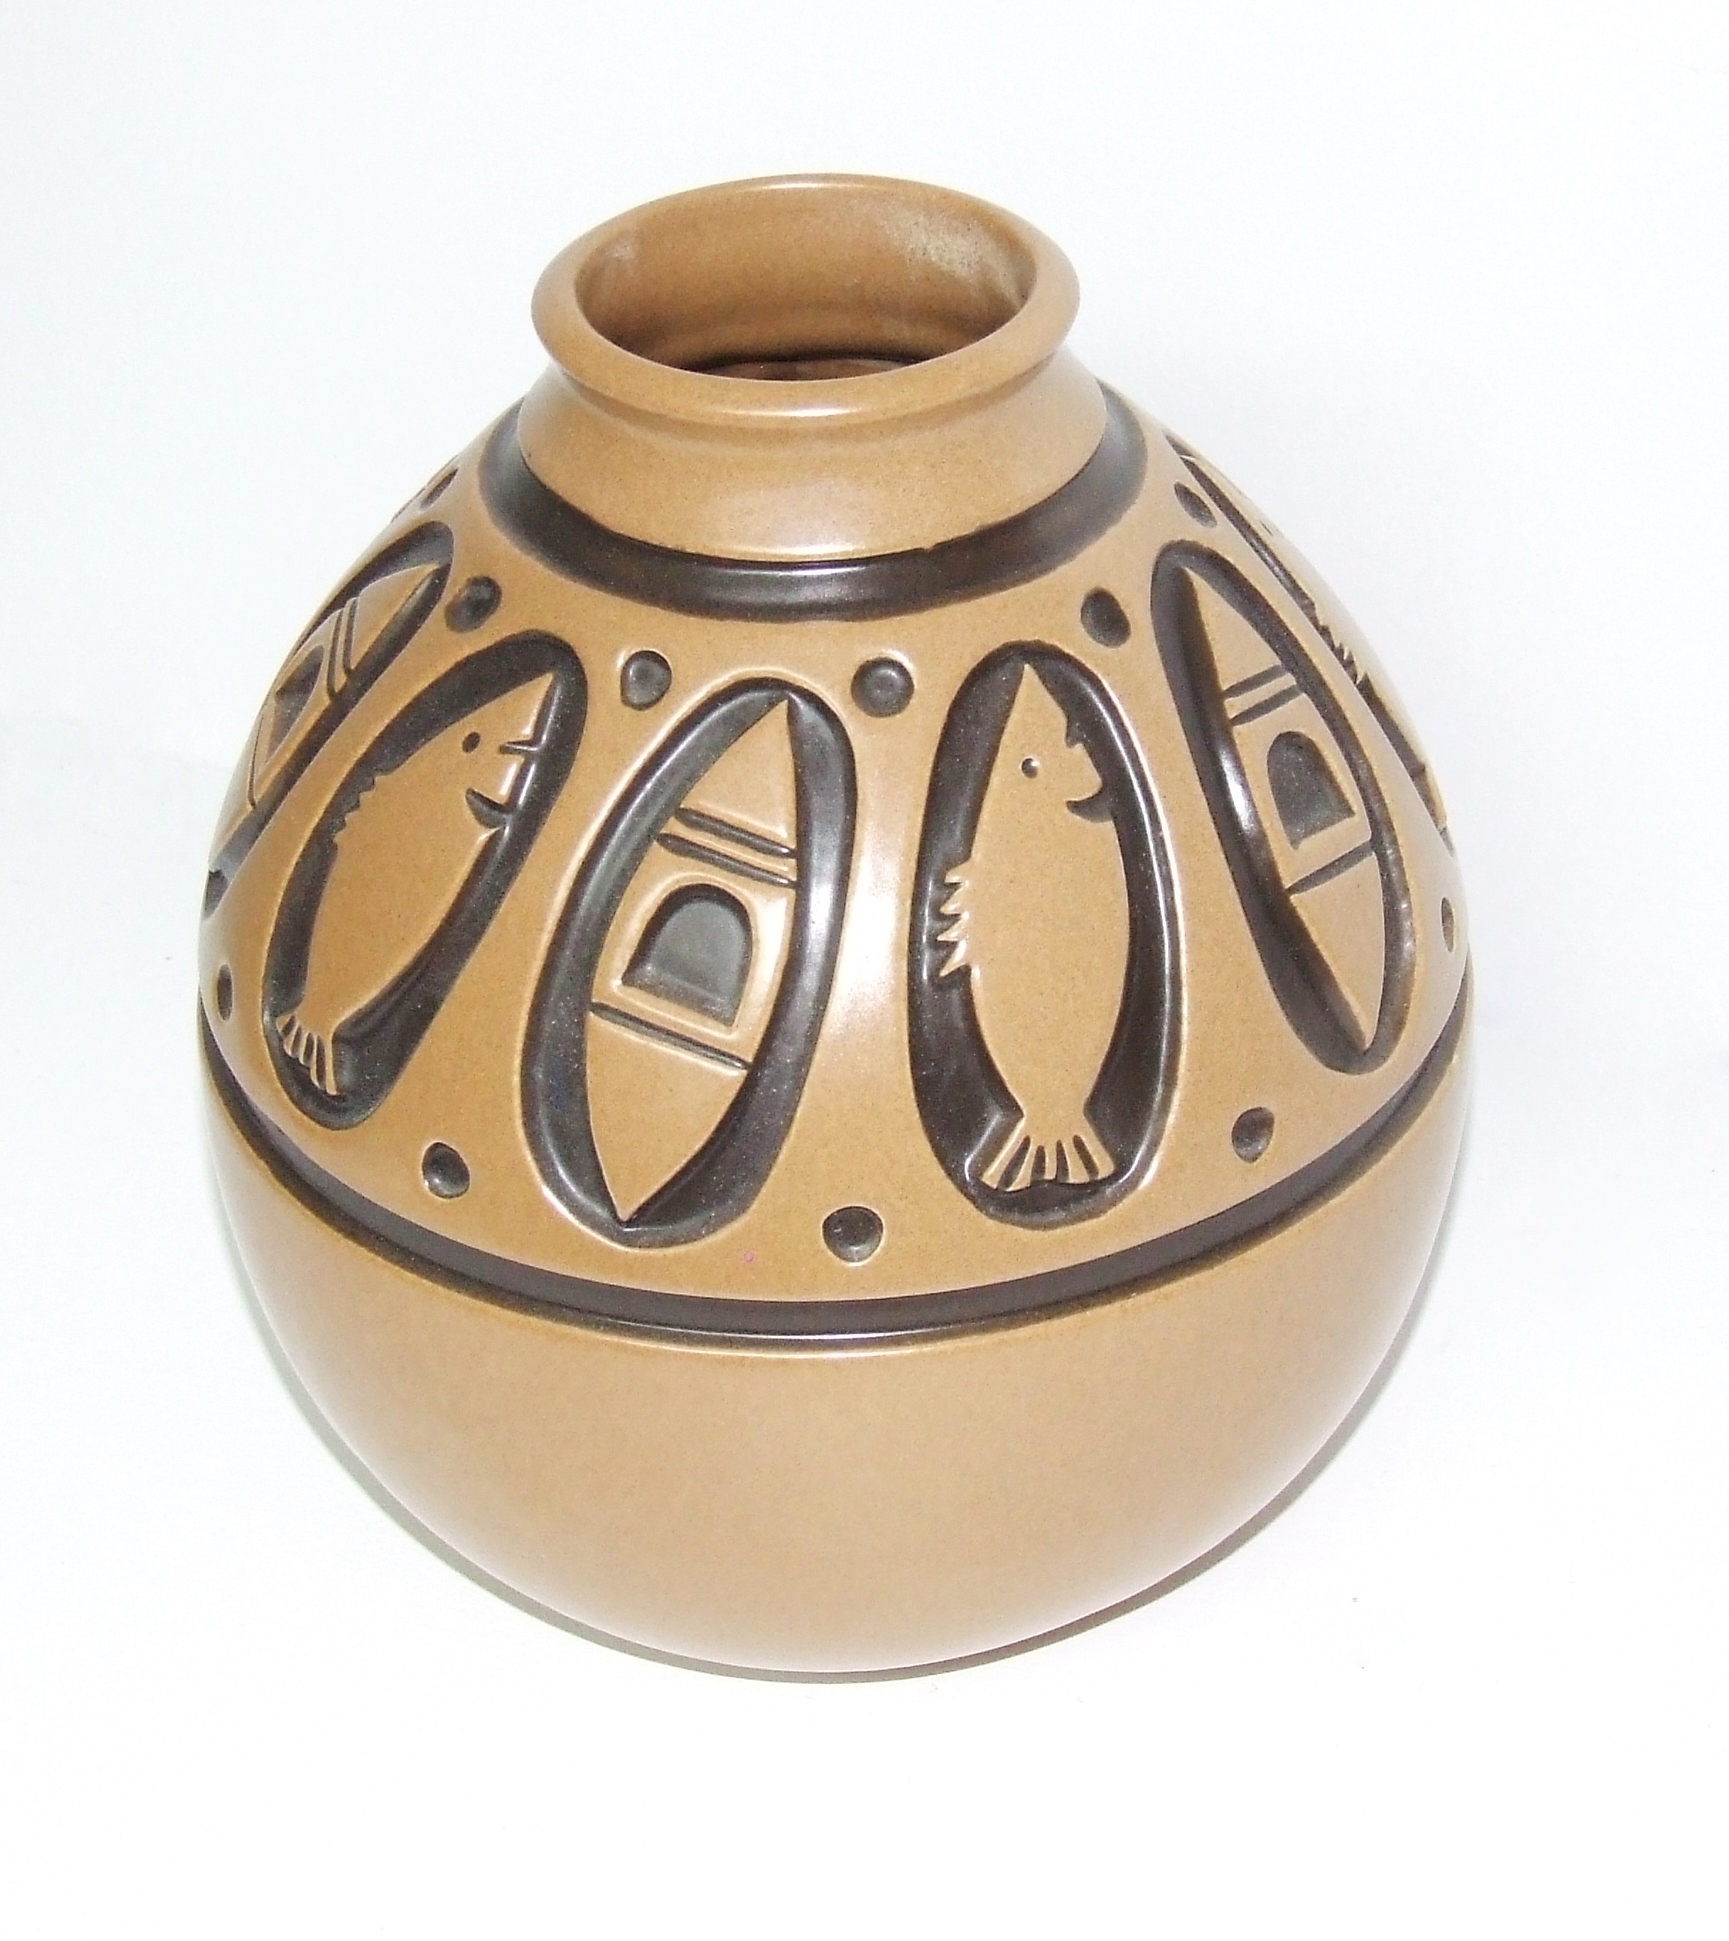 Vase from the Skimo series circa 1972.